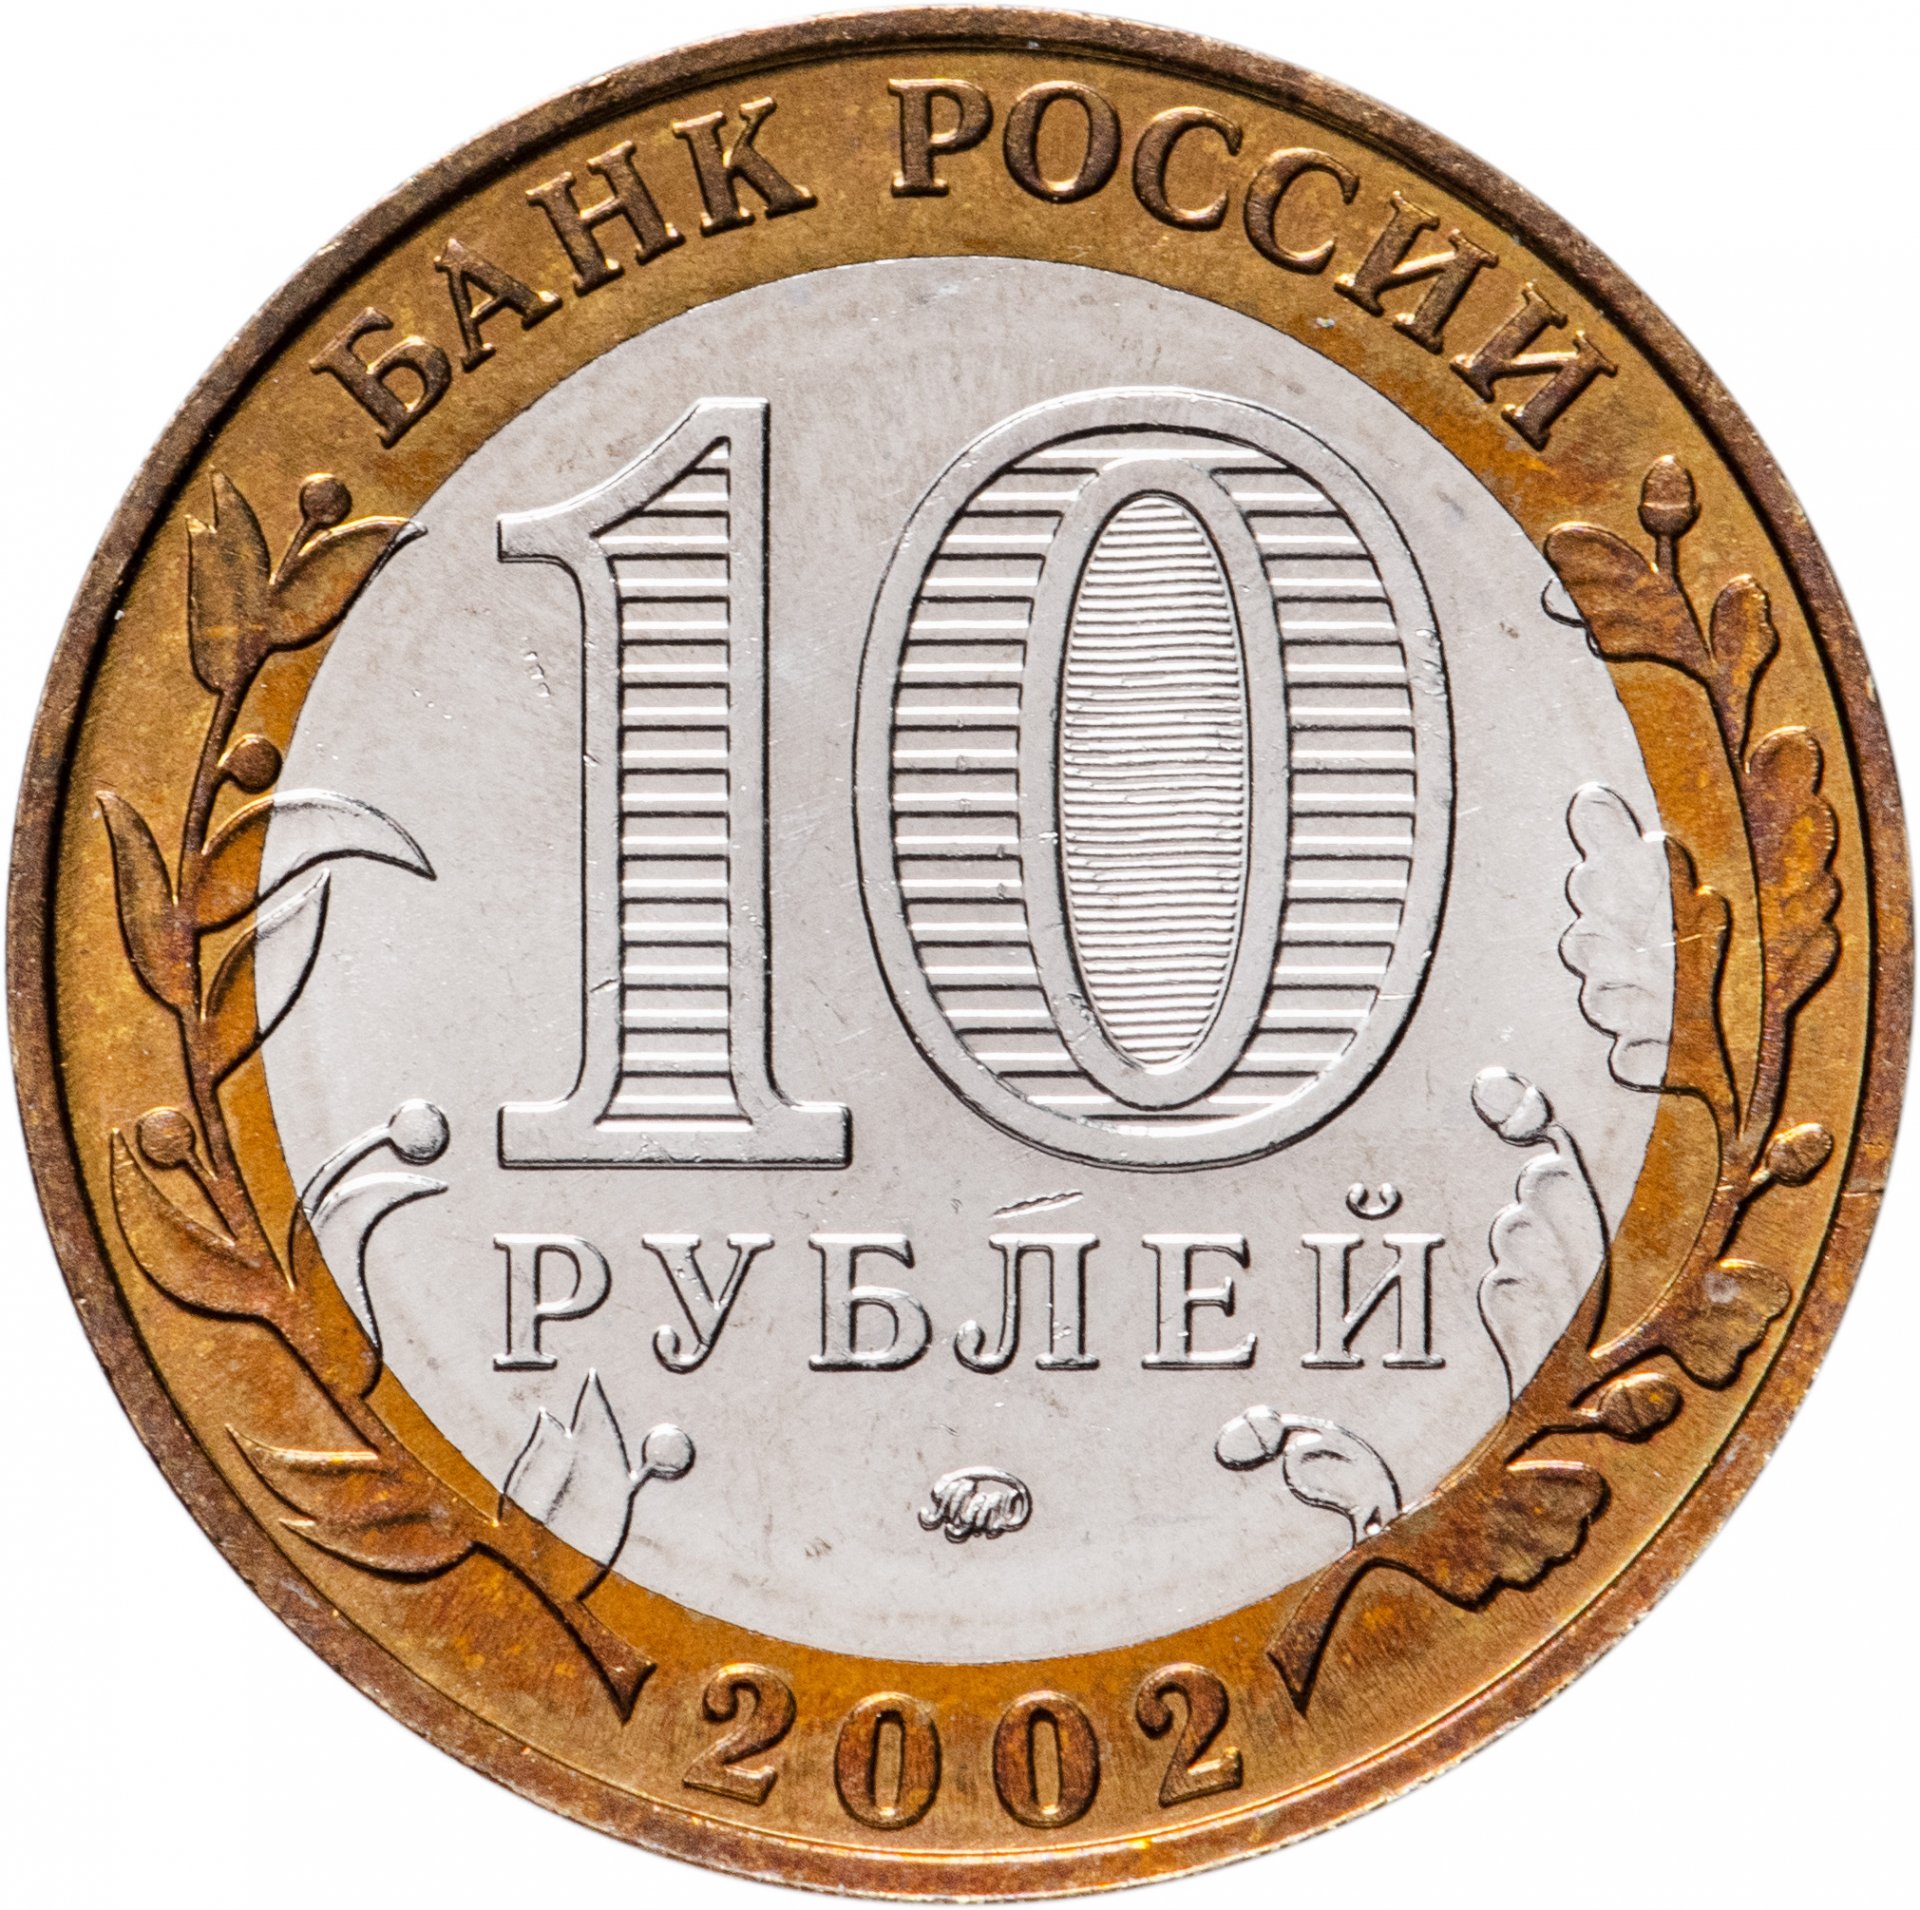 Steam рубли по 10 рублей фото 70